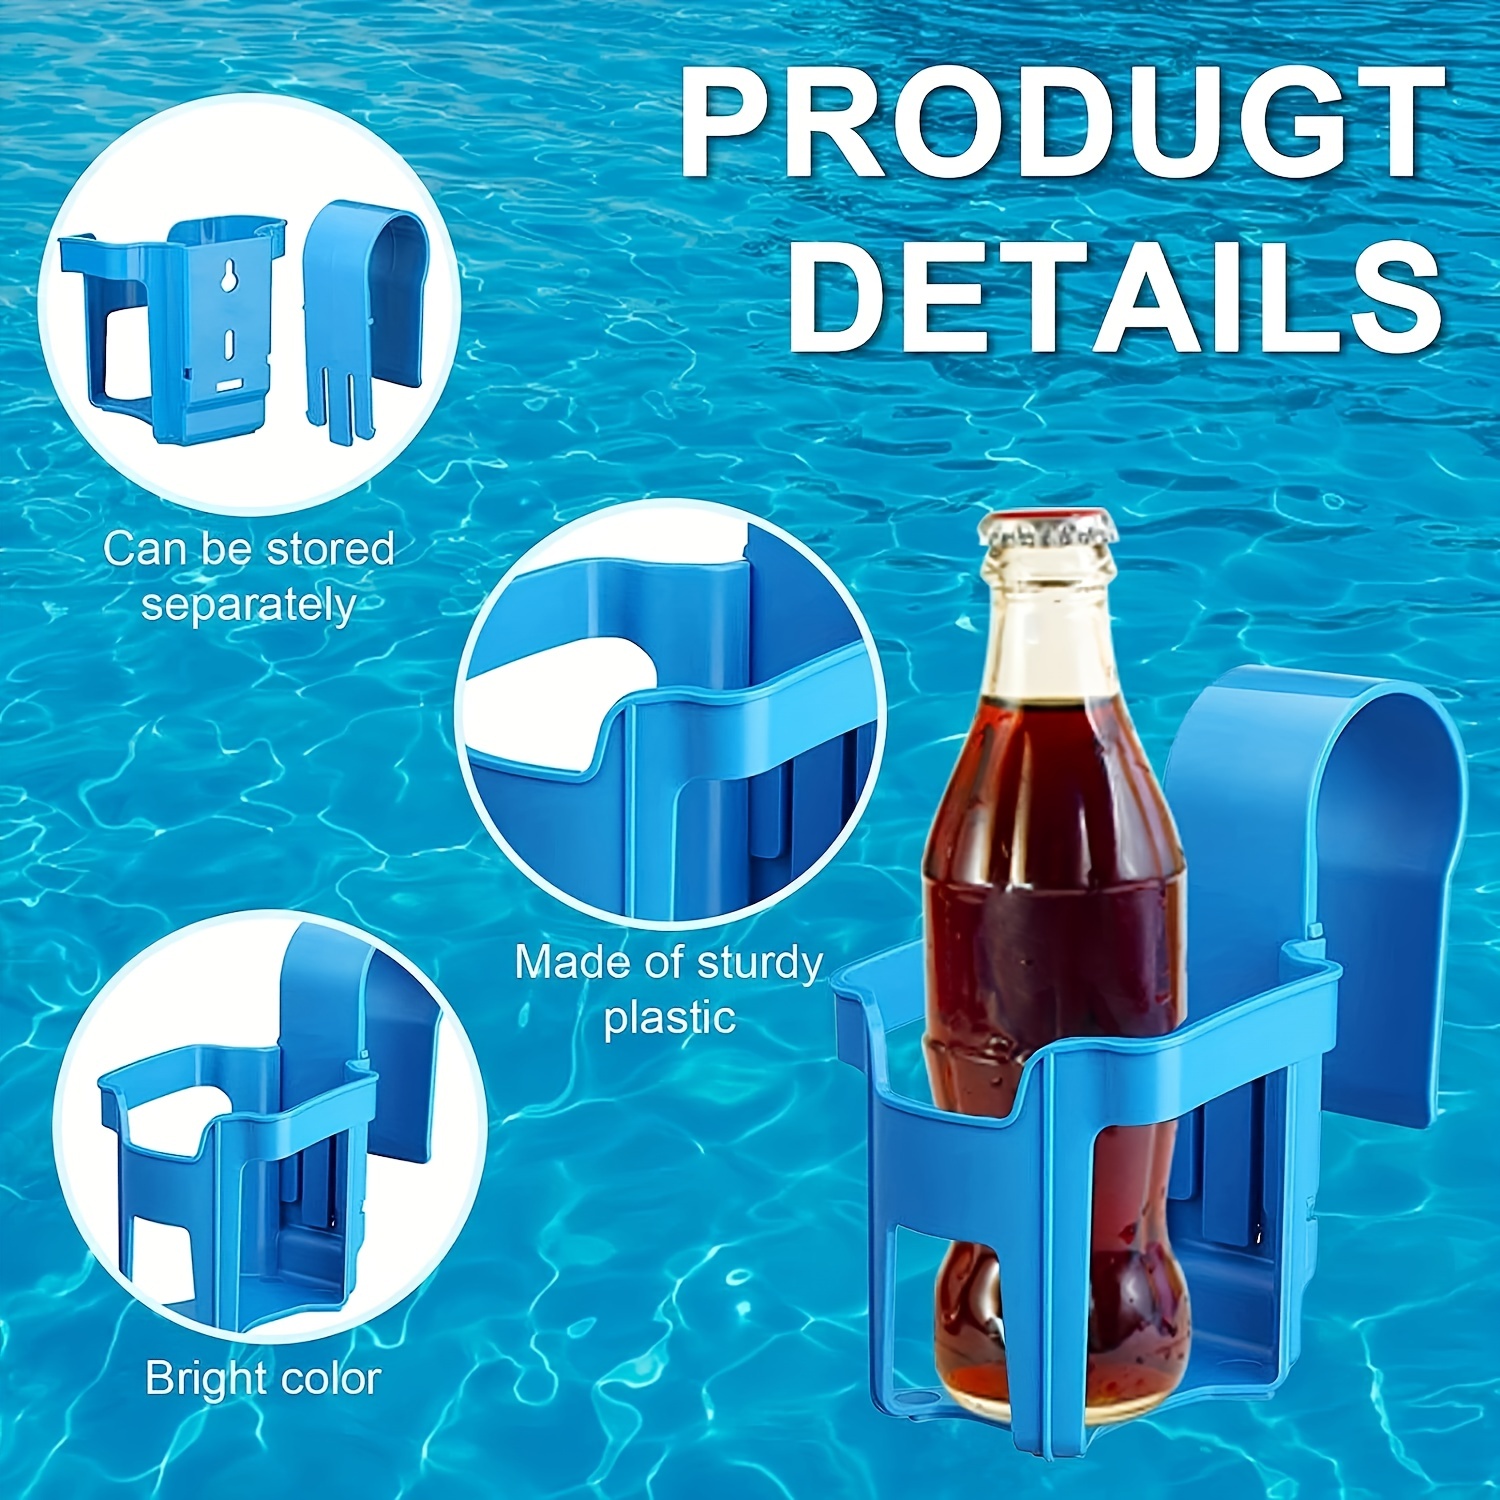 Plastic Drink Holders For Swimming Pools, Poolside Drink Holders